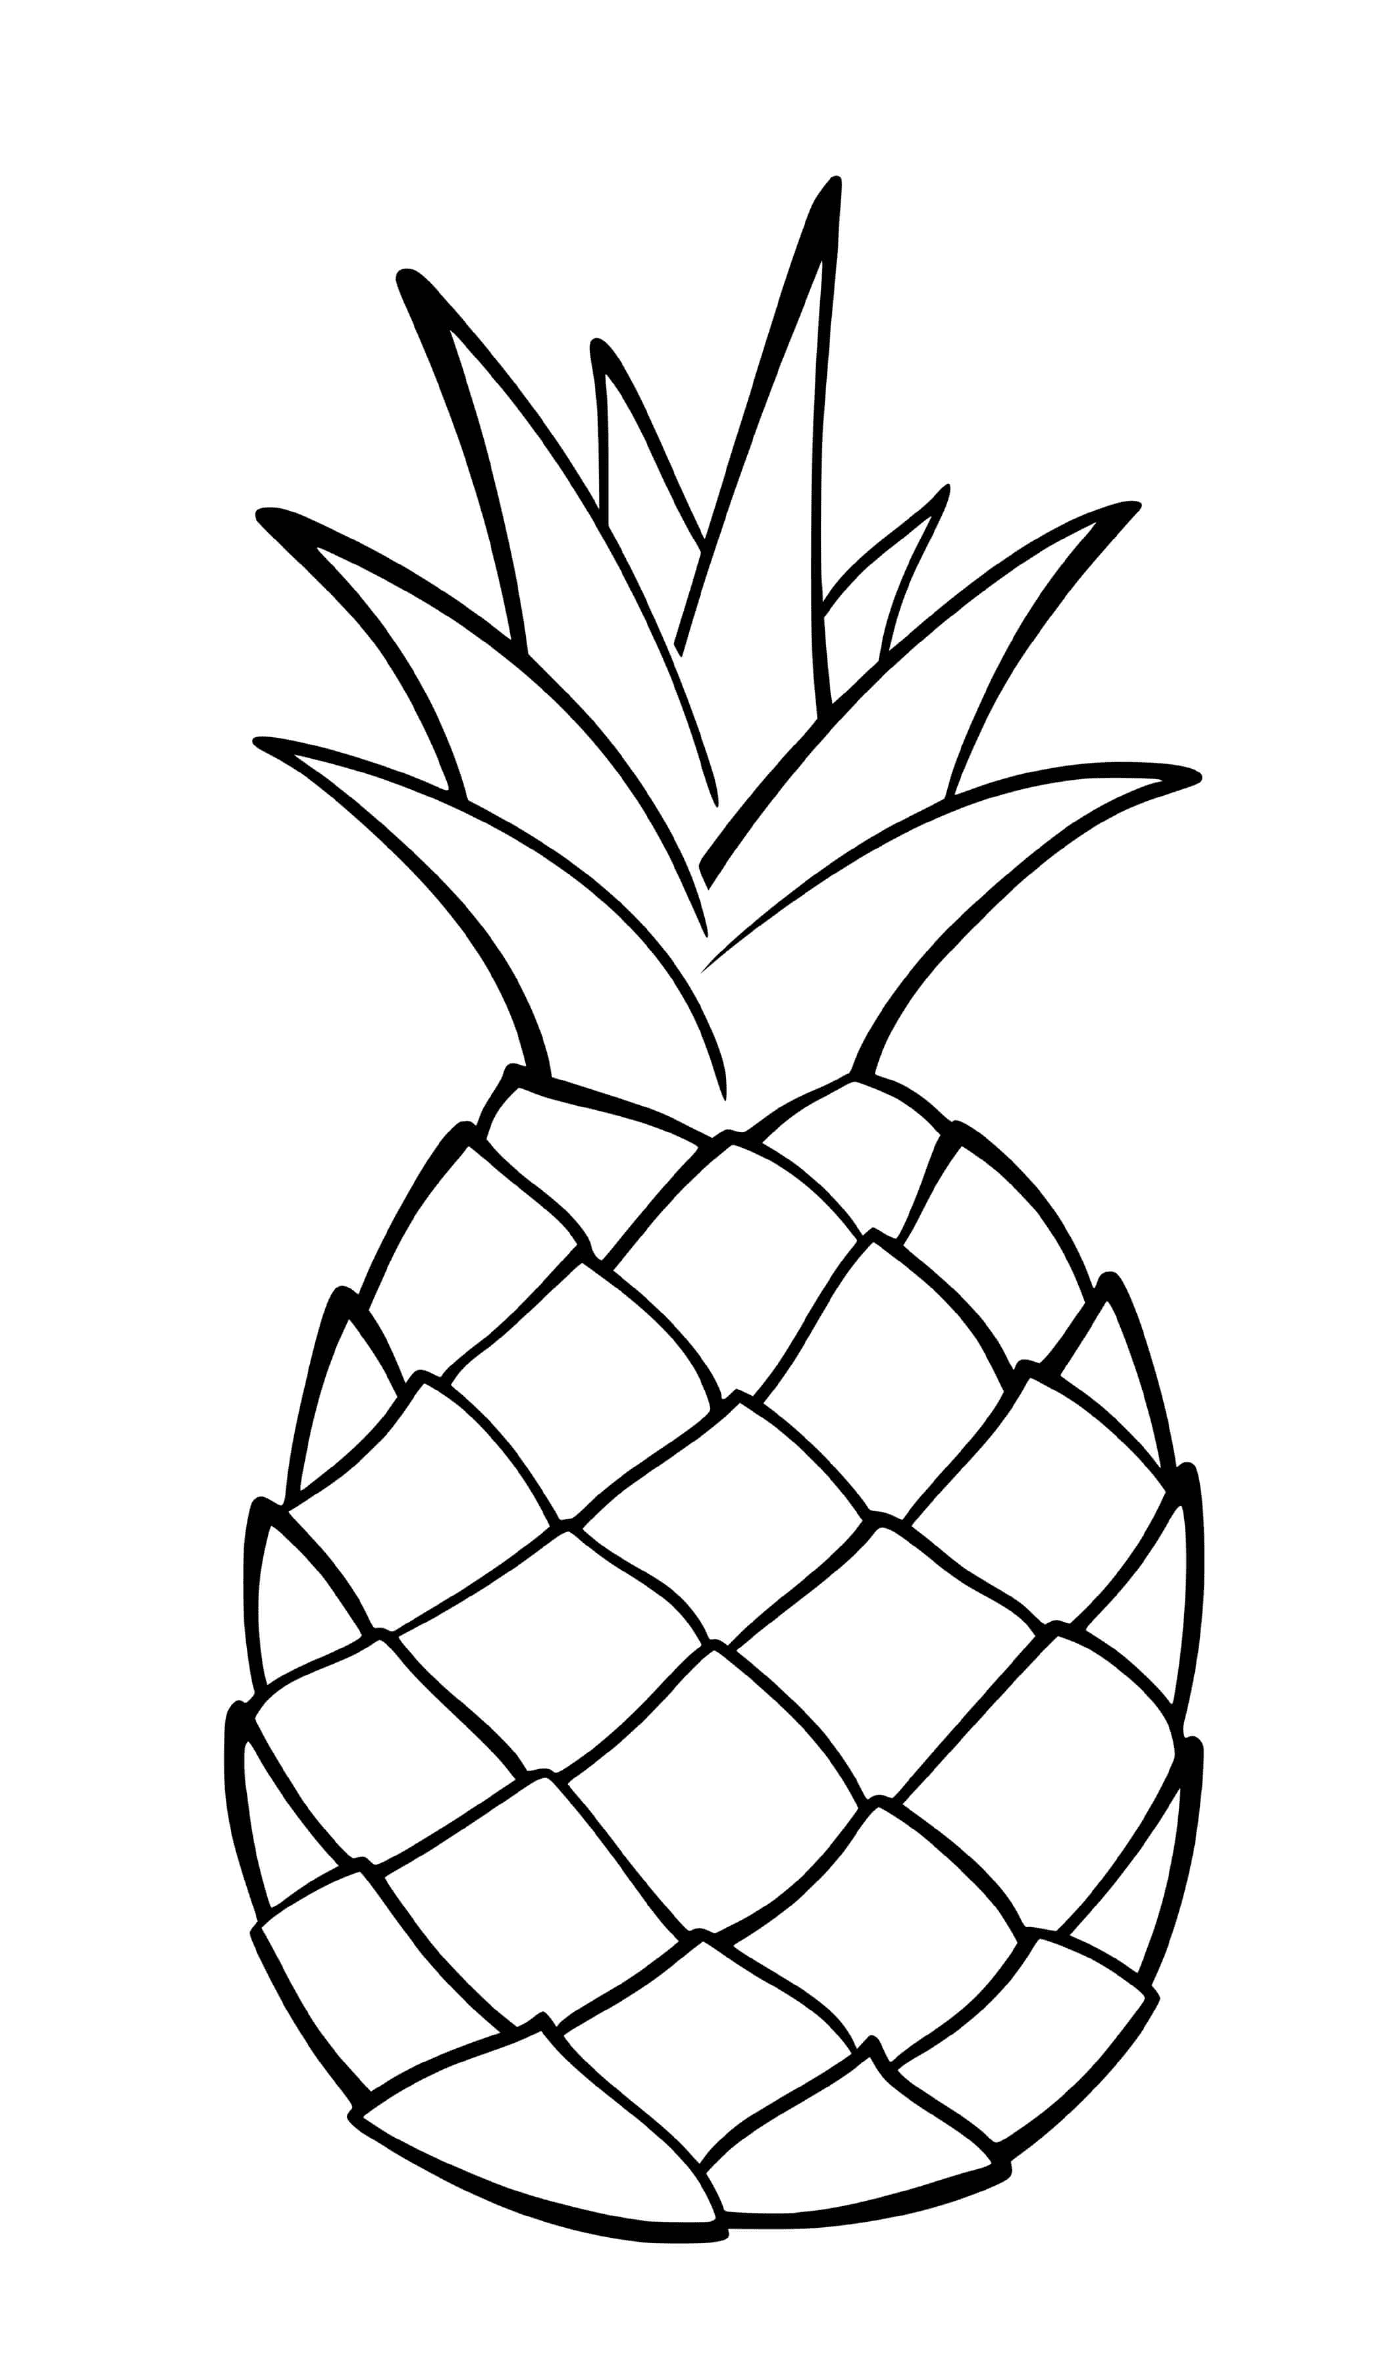  Un frutto esotico chiamato ananas 